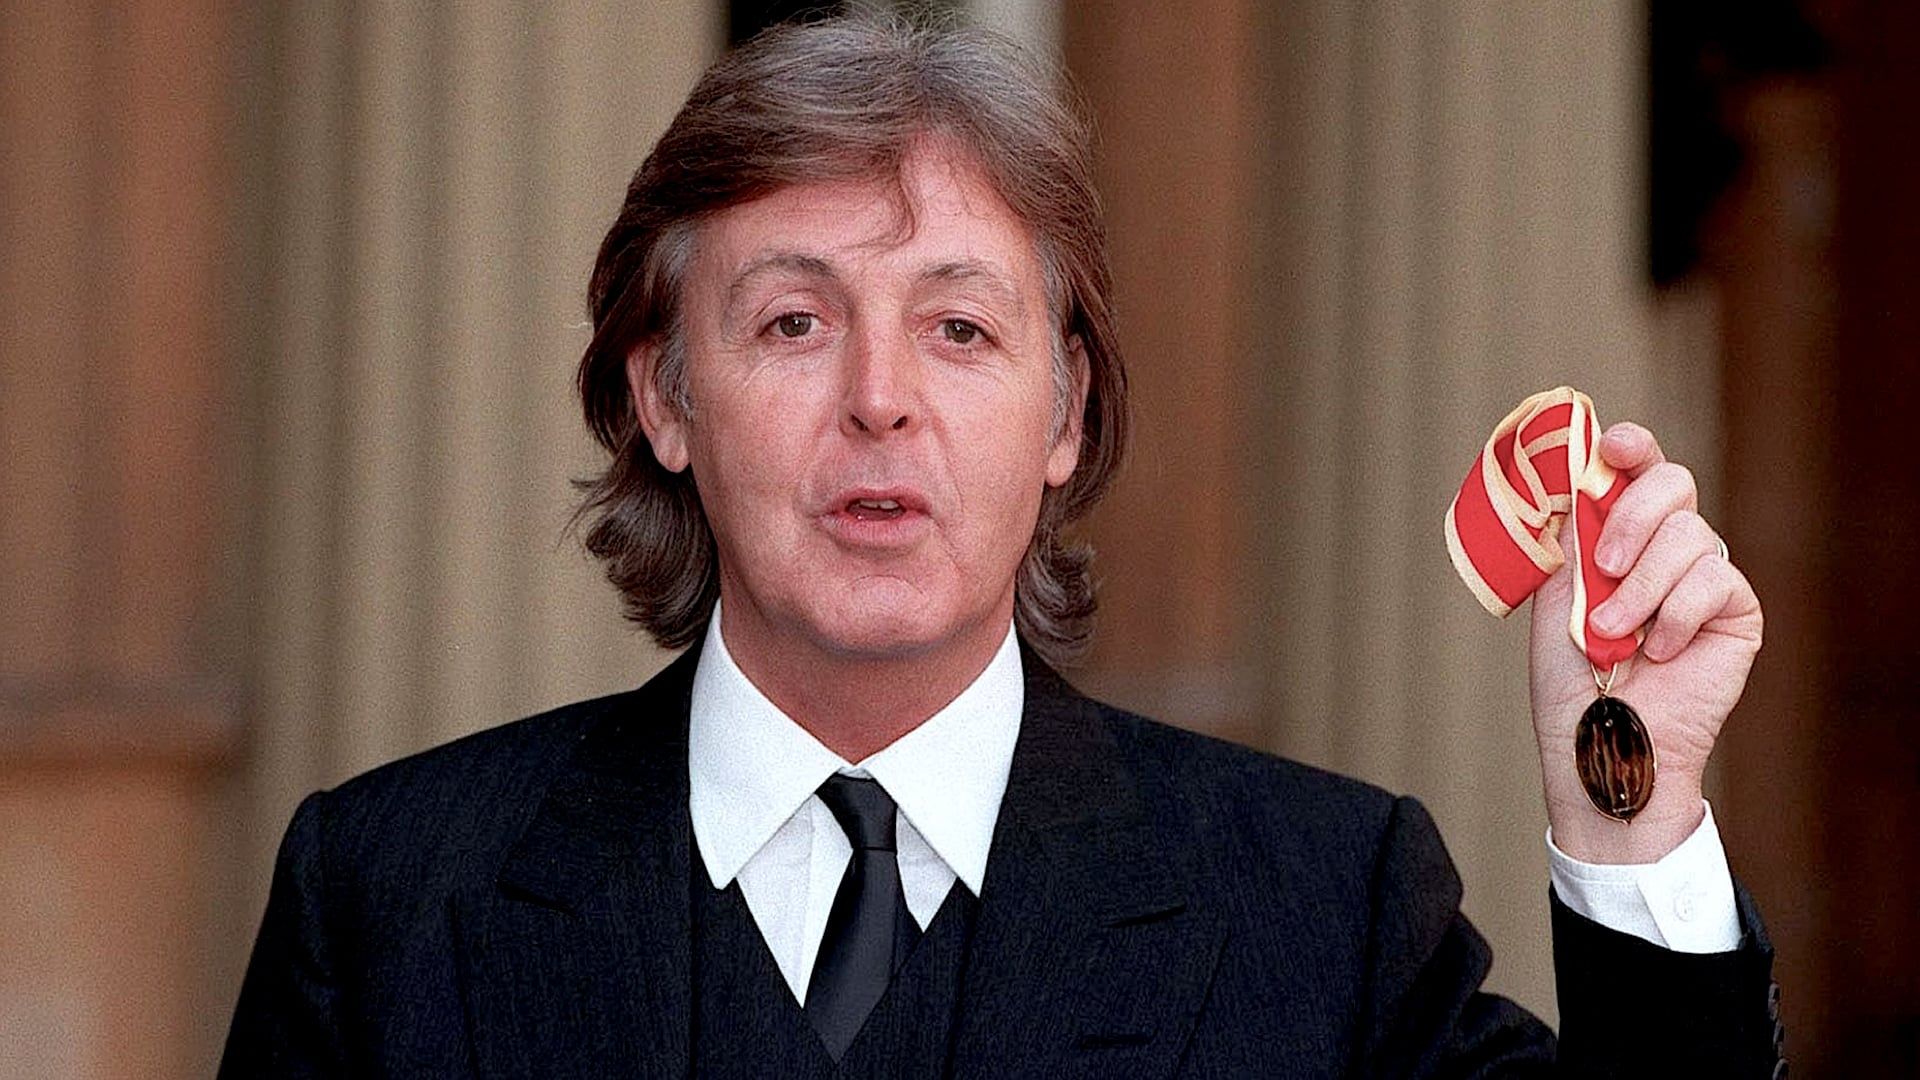 Paul McCartney: In the World Tonight background